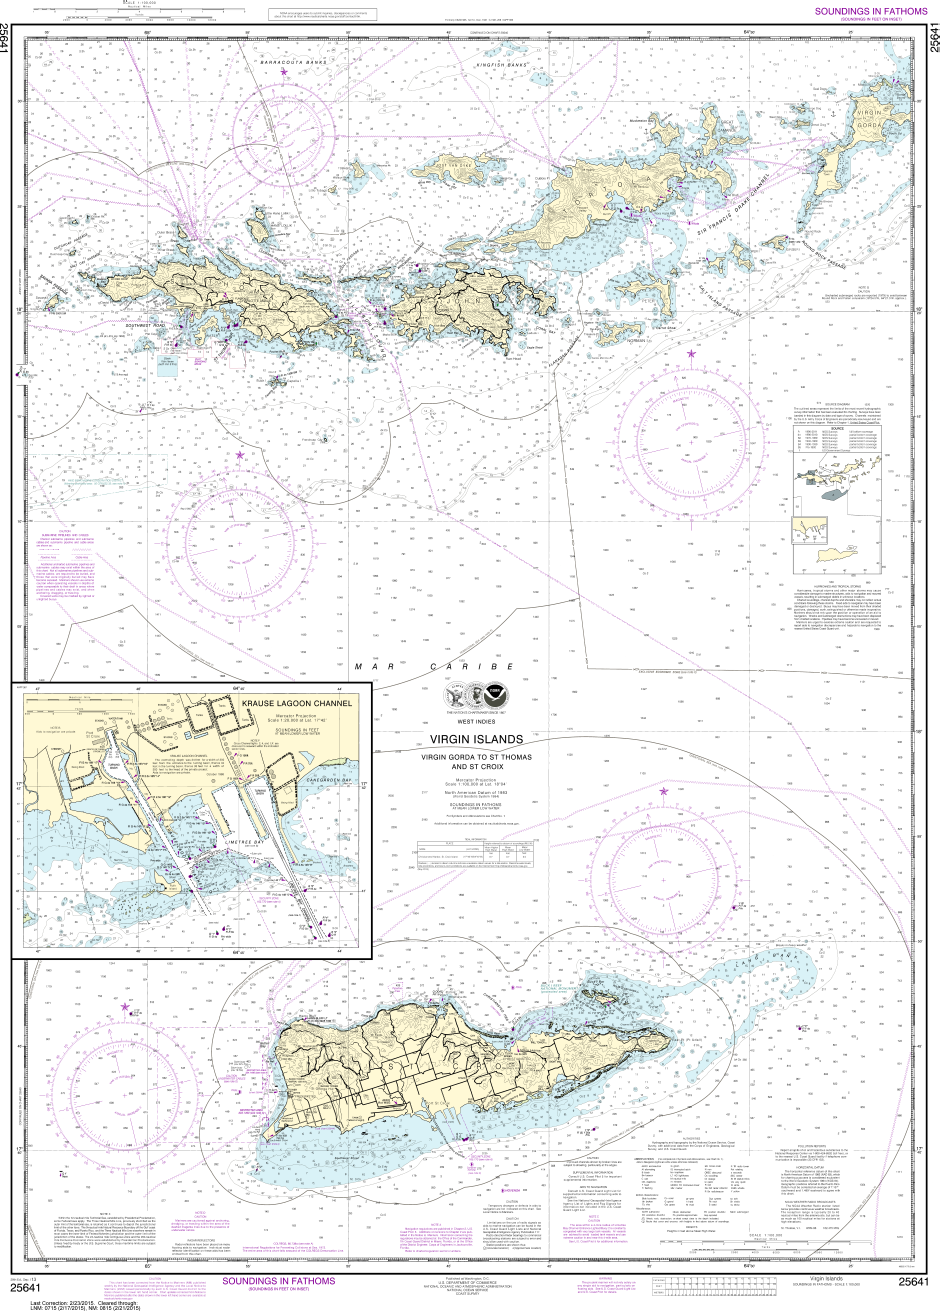 NOAA Chart 25641: Virgin Islands - Virgin Gorda to St. Thomas and St. Croix, Krause Lagoon Channel